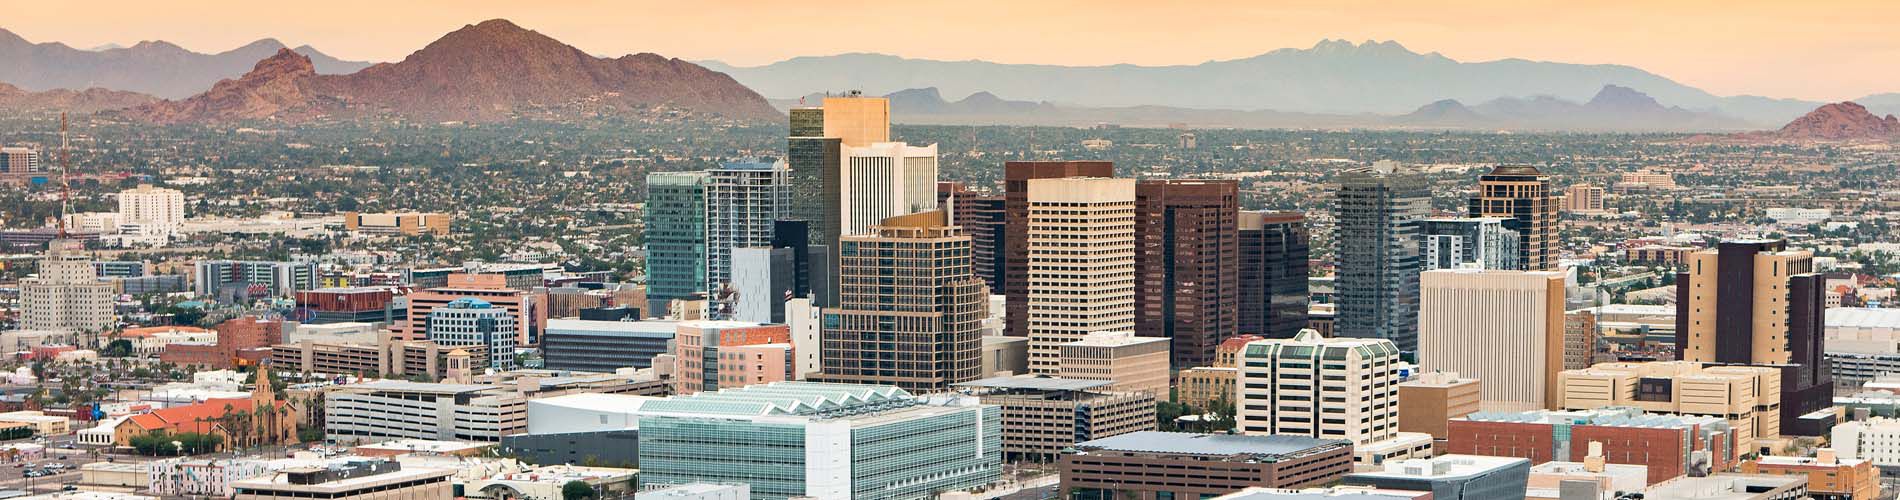 A skyline view of downtown Phoenix.